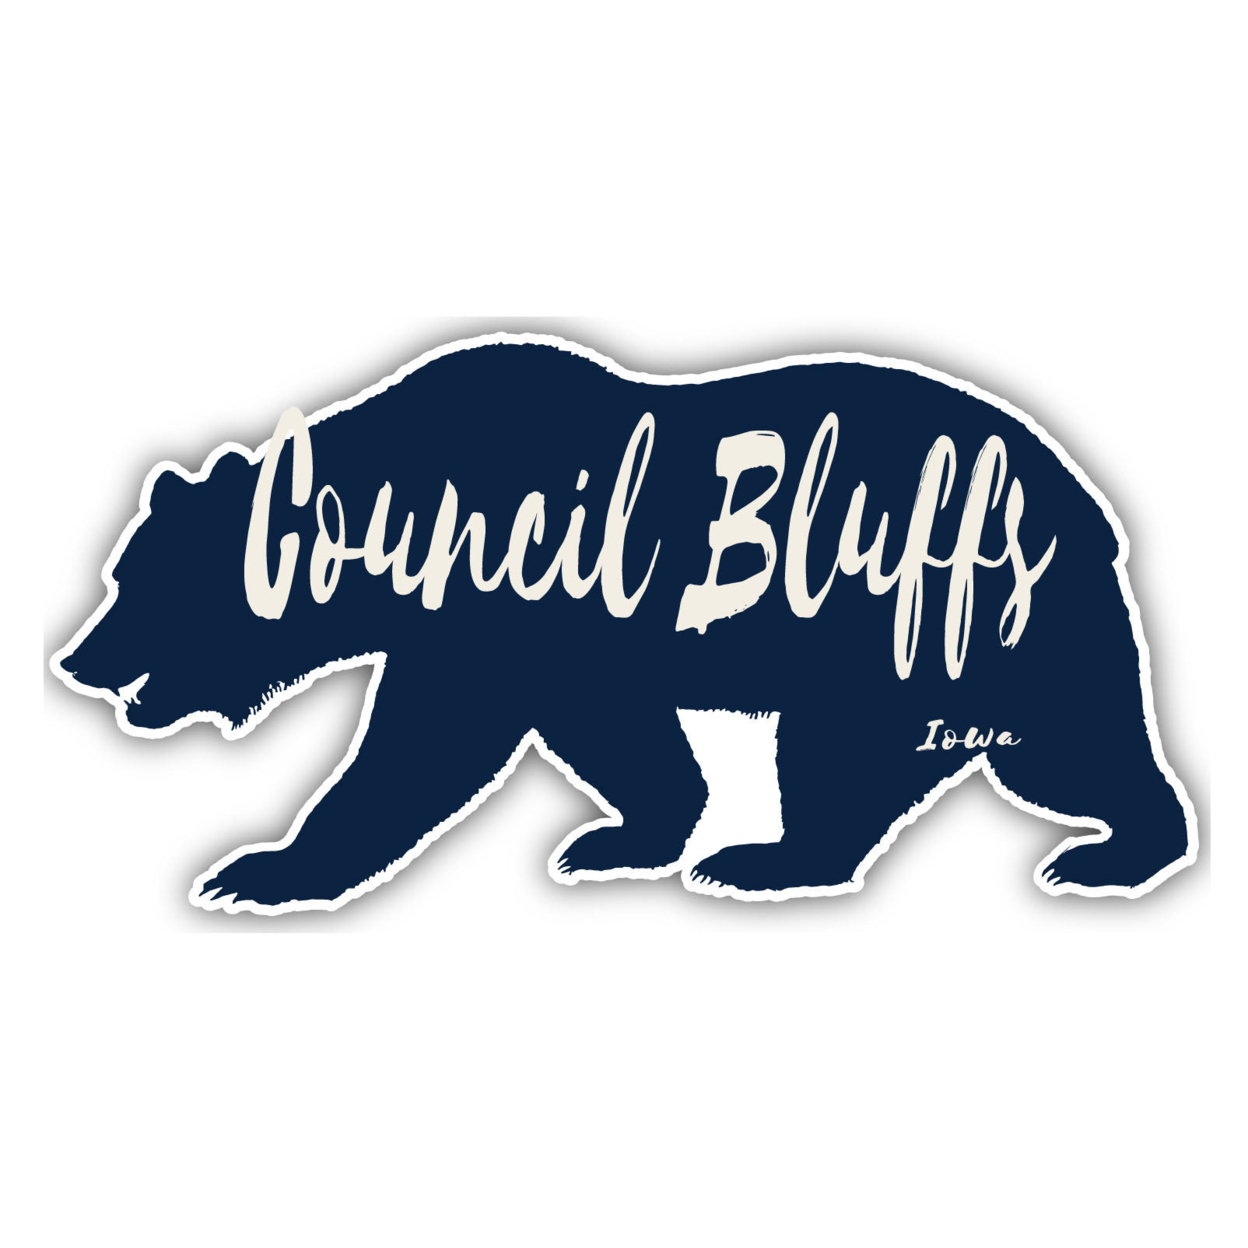 Council Bluffs Iowa Souvenir Decorative Stickers (Choose Theme And Size) - Single Unit, 10-Inch, Tent